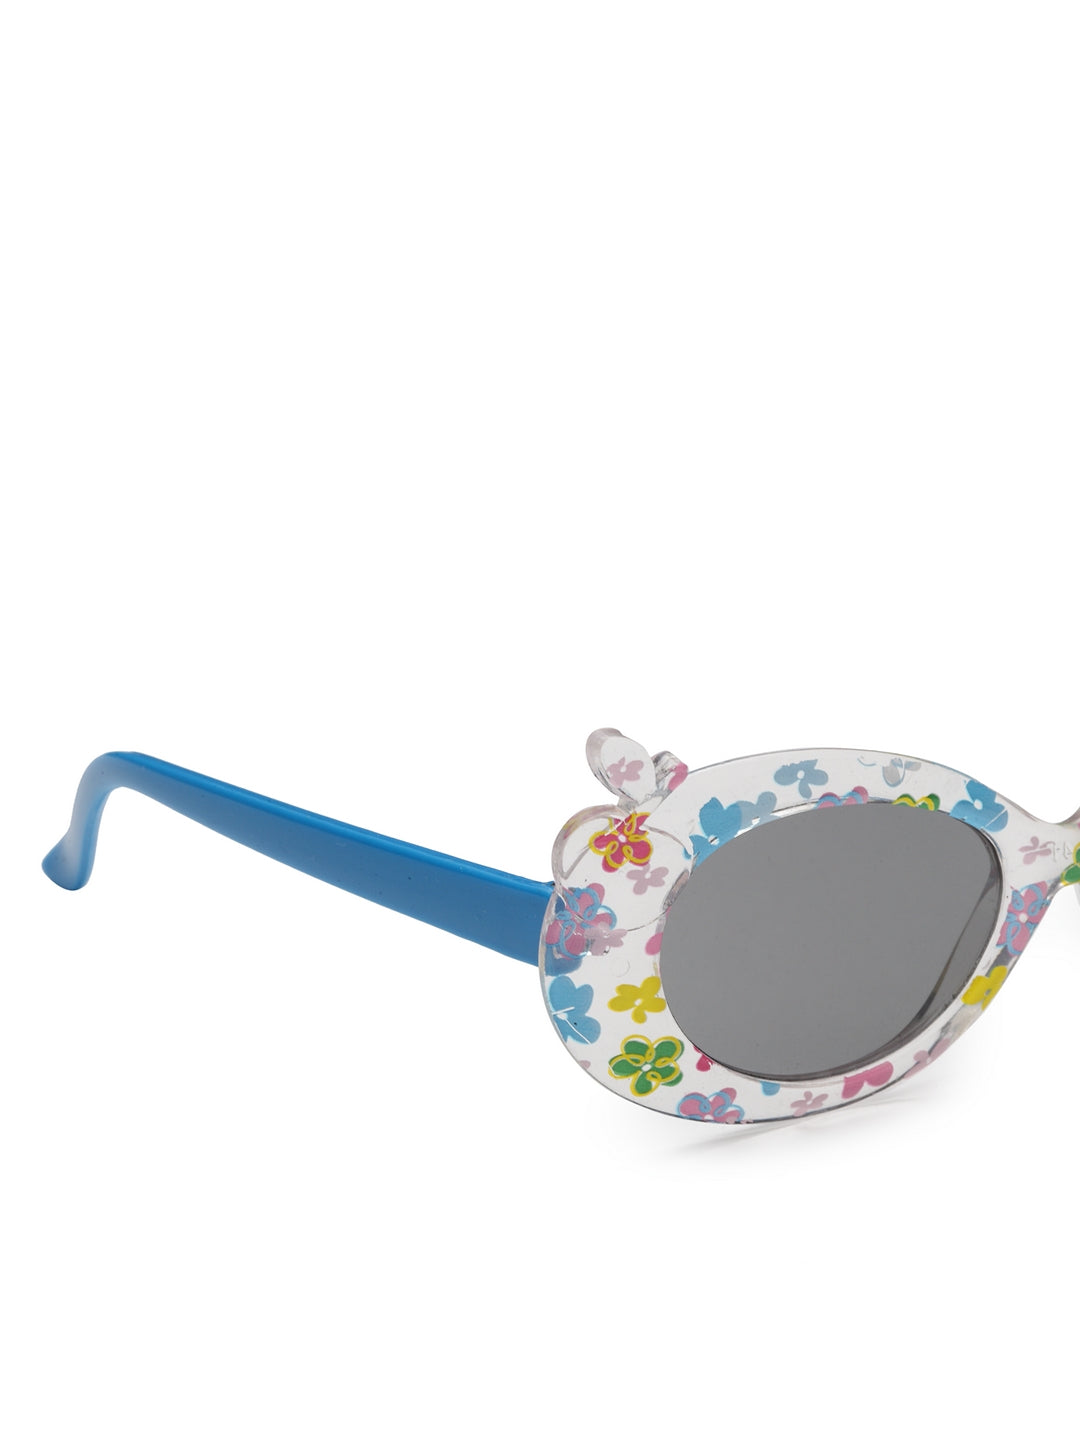 Stol'n Polarized UV-Protected Round Shape Sunglasses for Kids- Aqua